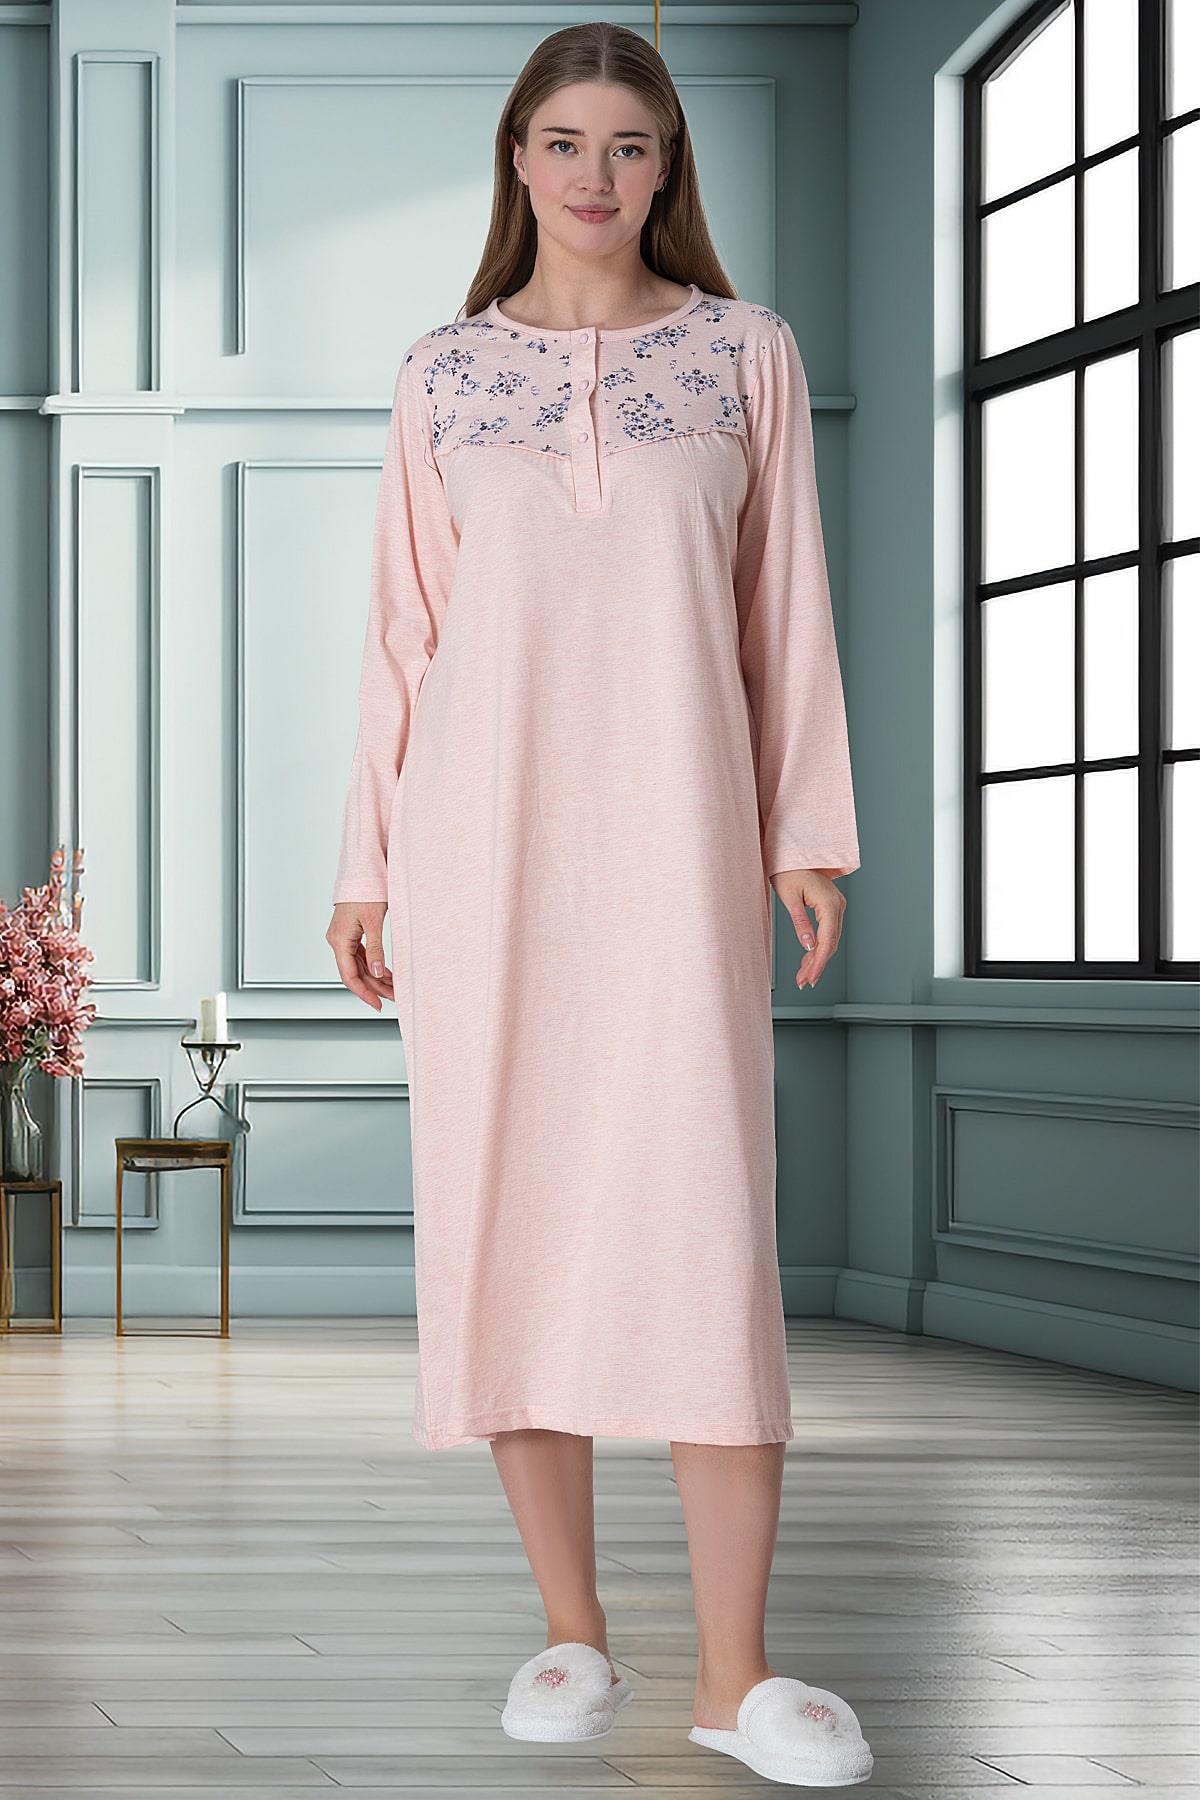 Shopymommy 6026 Patterned Plus Size Maternity & Nursing Nightgown Powder